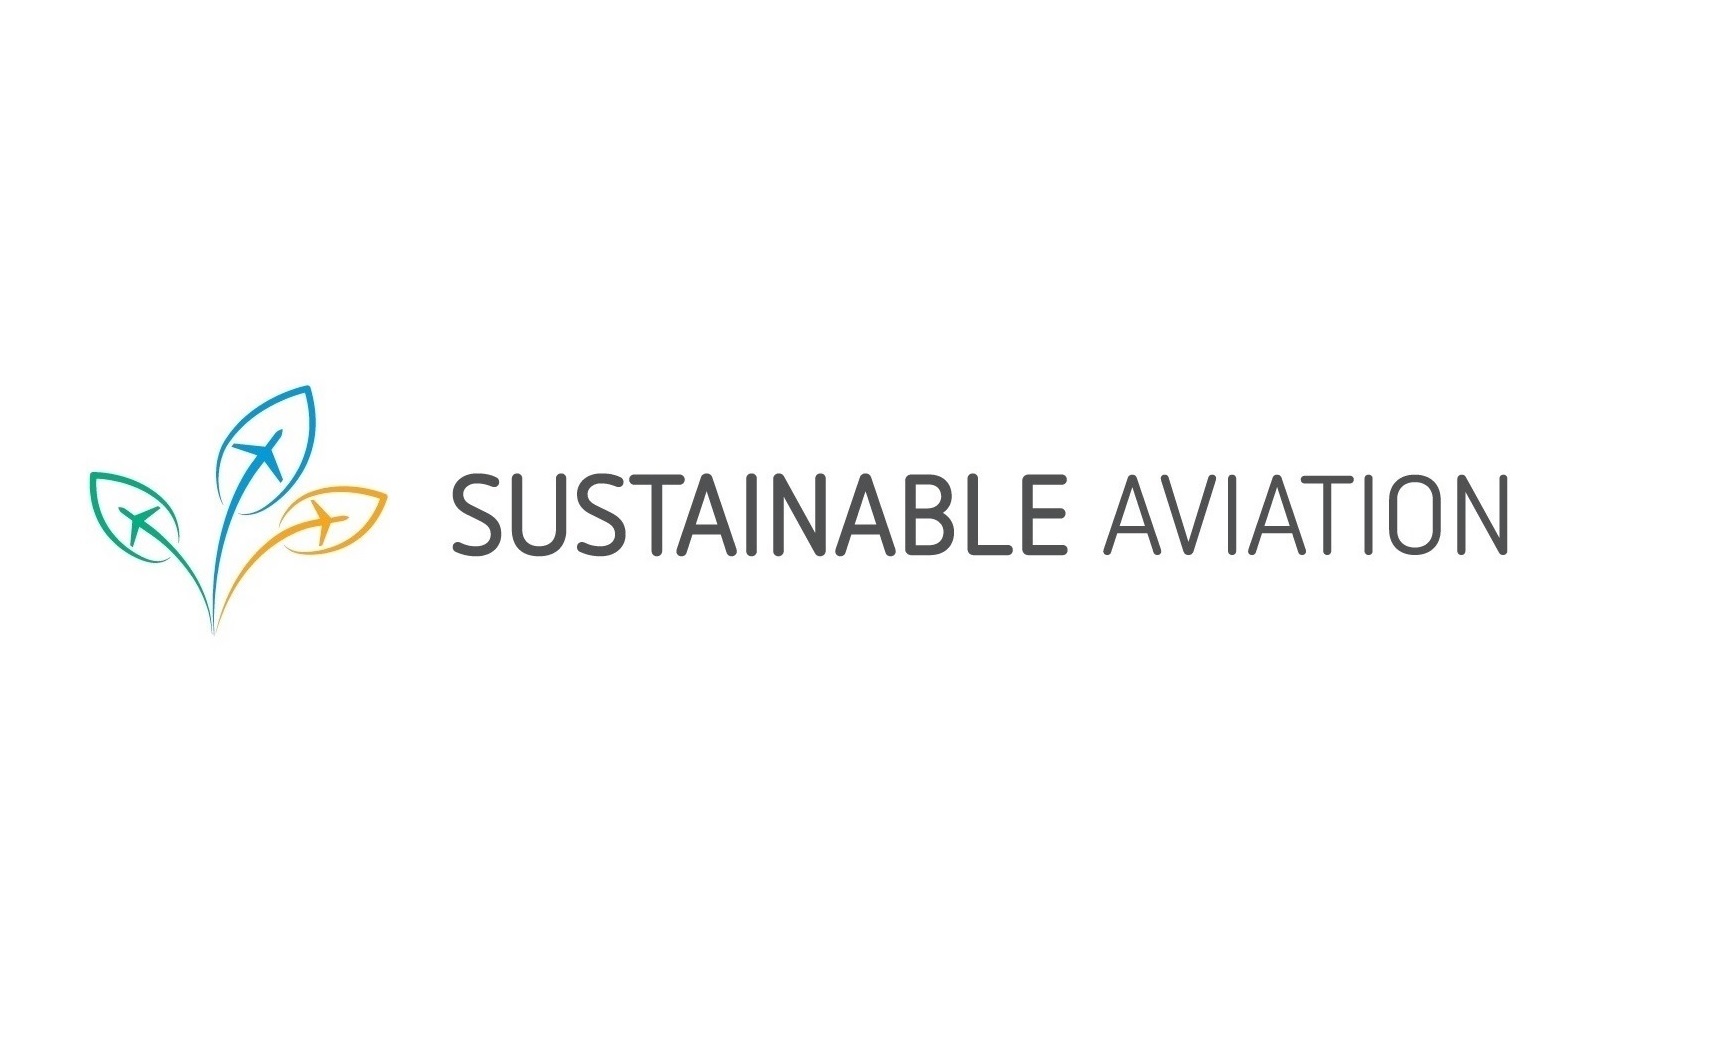 Sustainable Aviation launches new manifesto